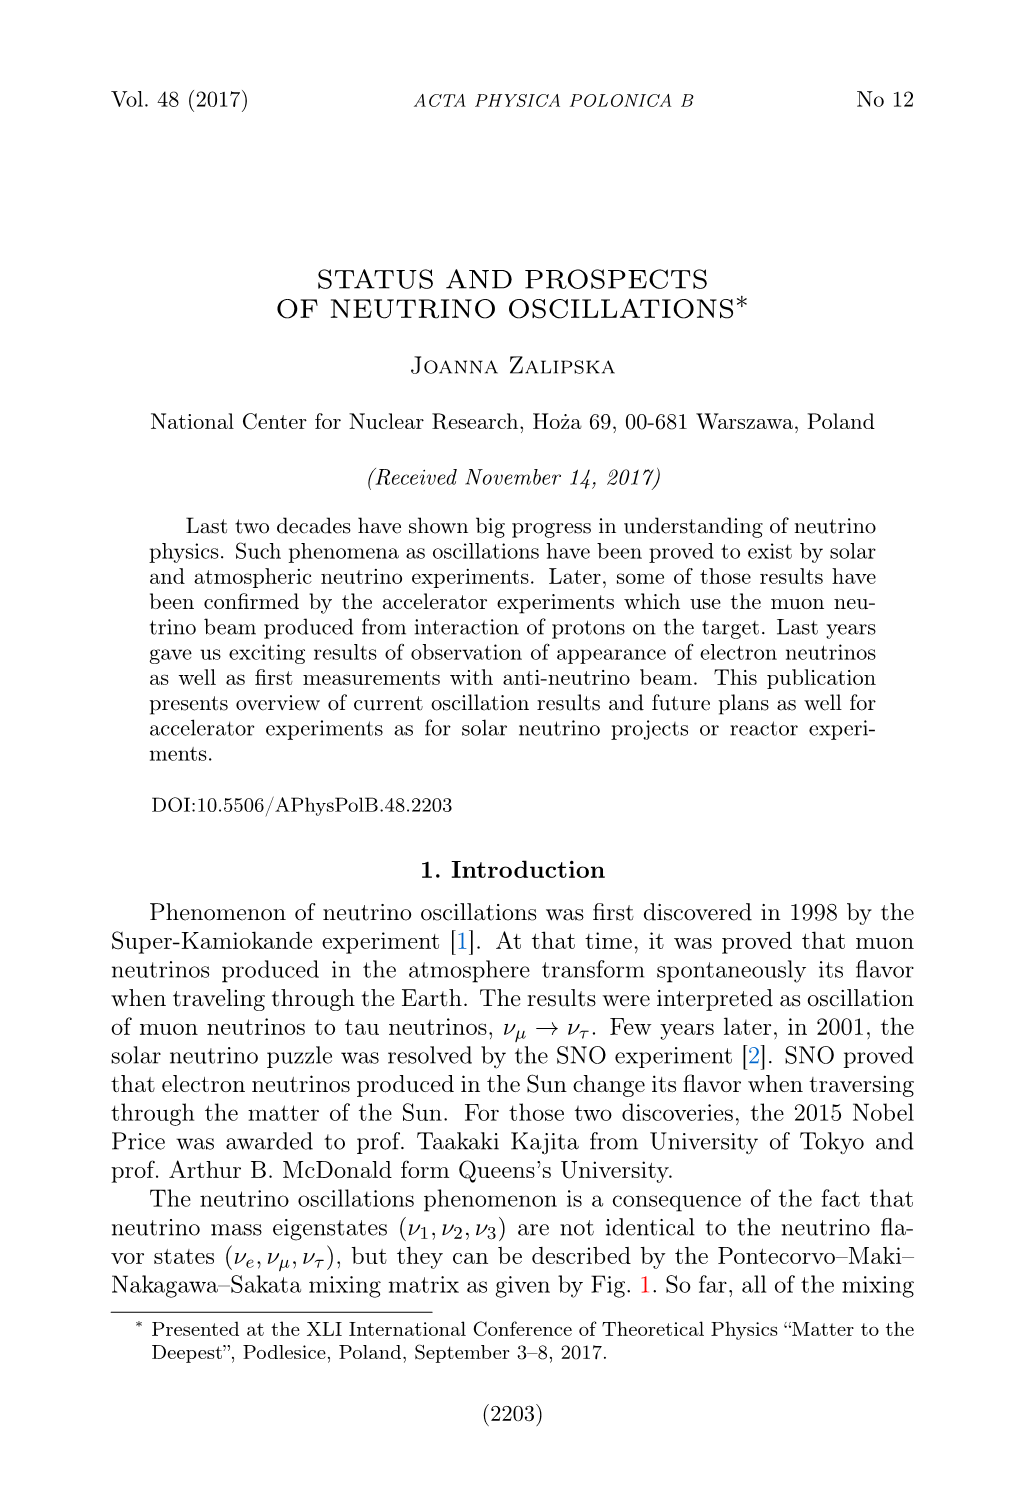 Status and Prospectsof Neutrino Oscillations